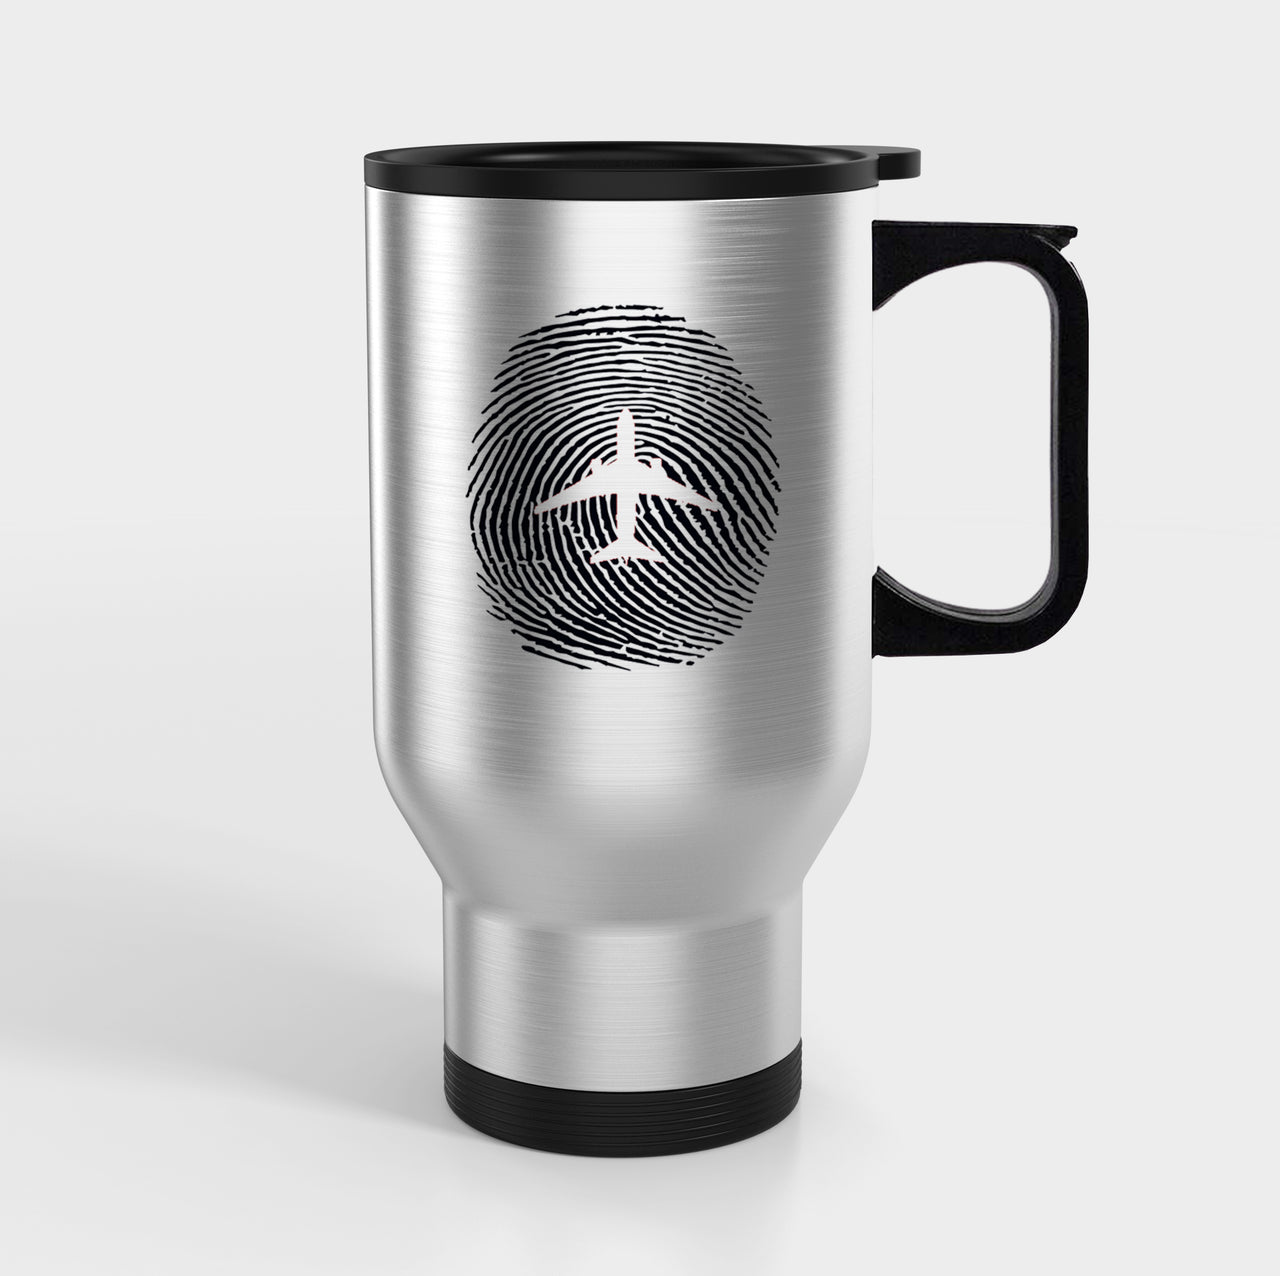 Aviation Finger Print Designed Travel Mugs (With Holder)